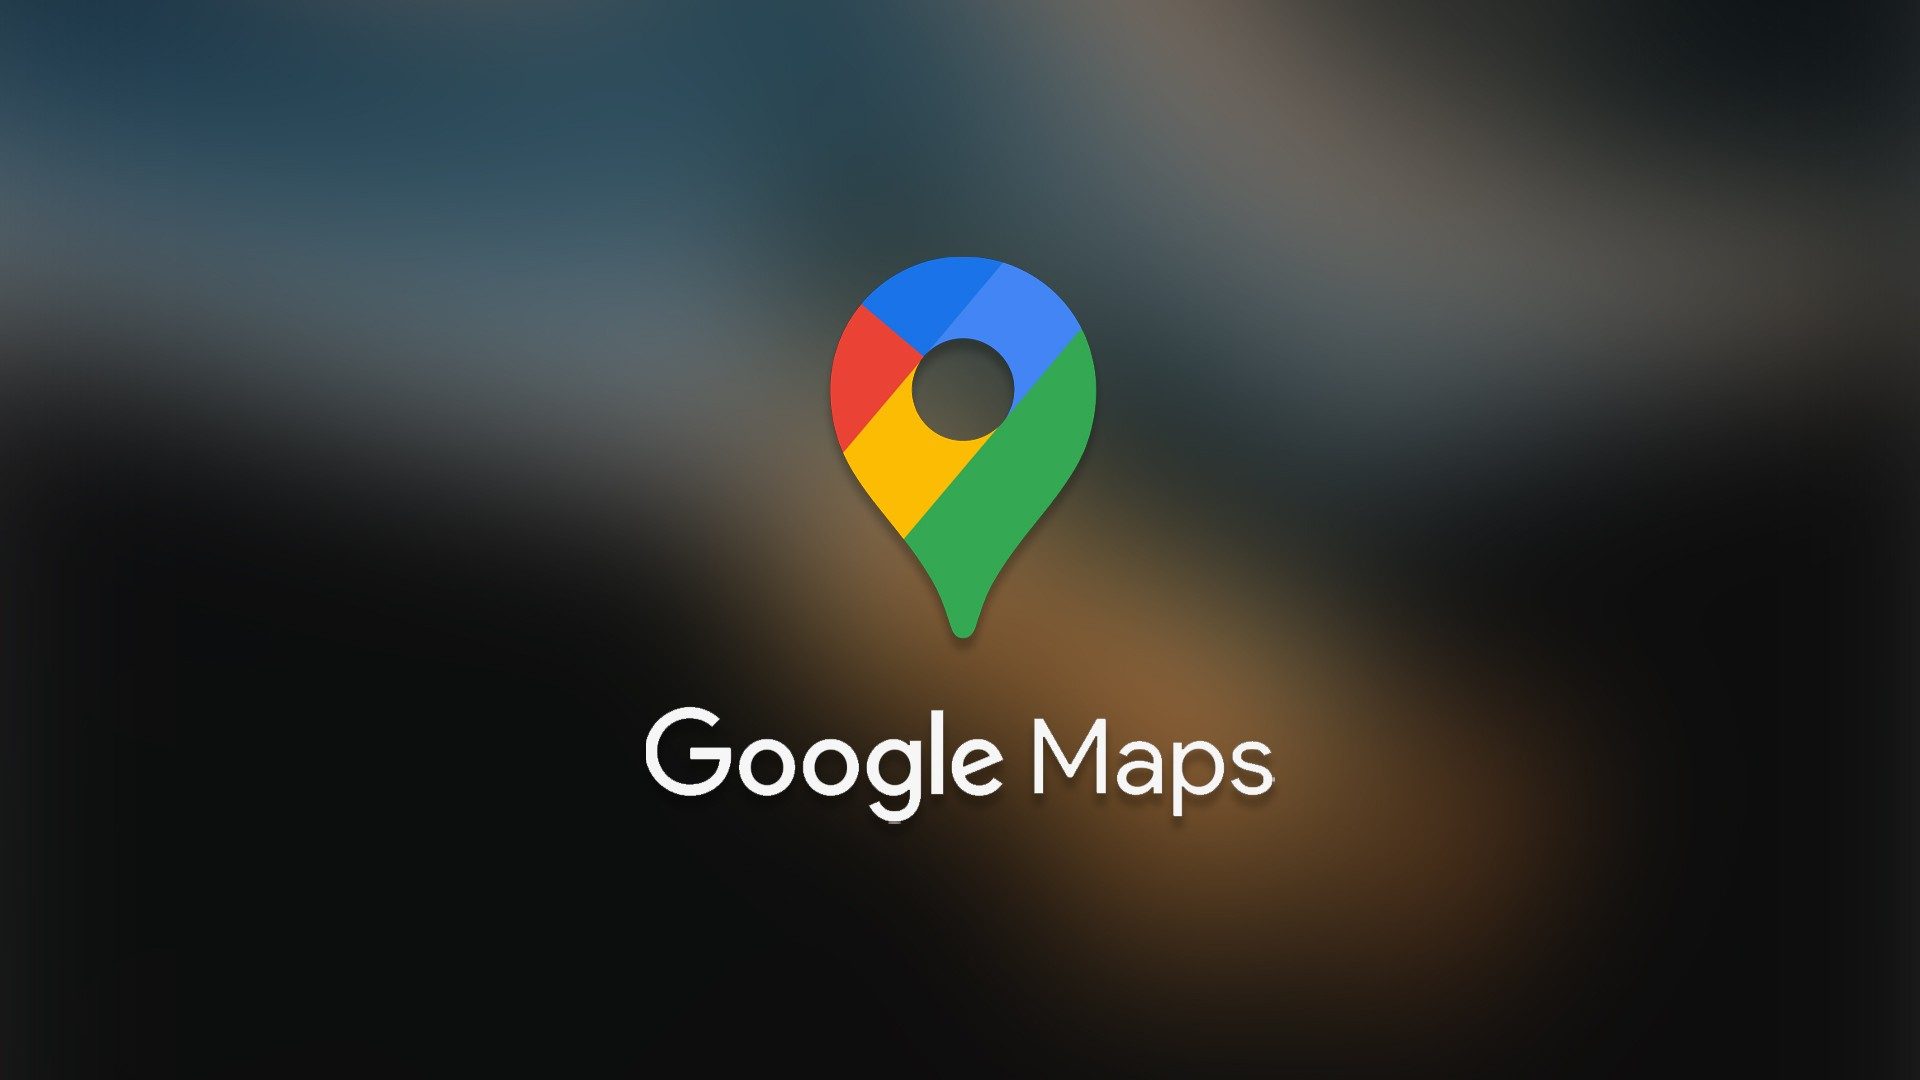 Google maps profiles get interesting as Google integrates social features